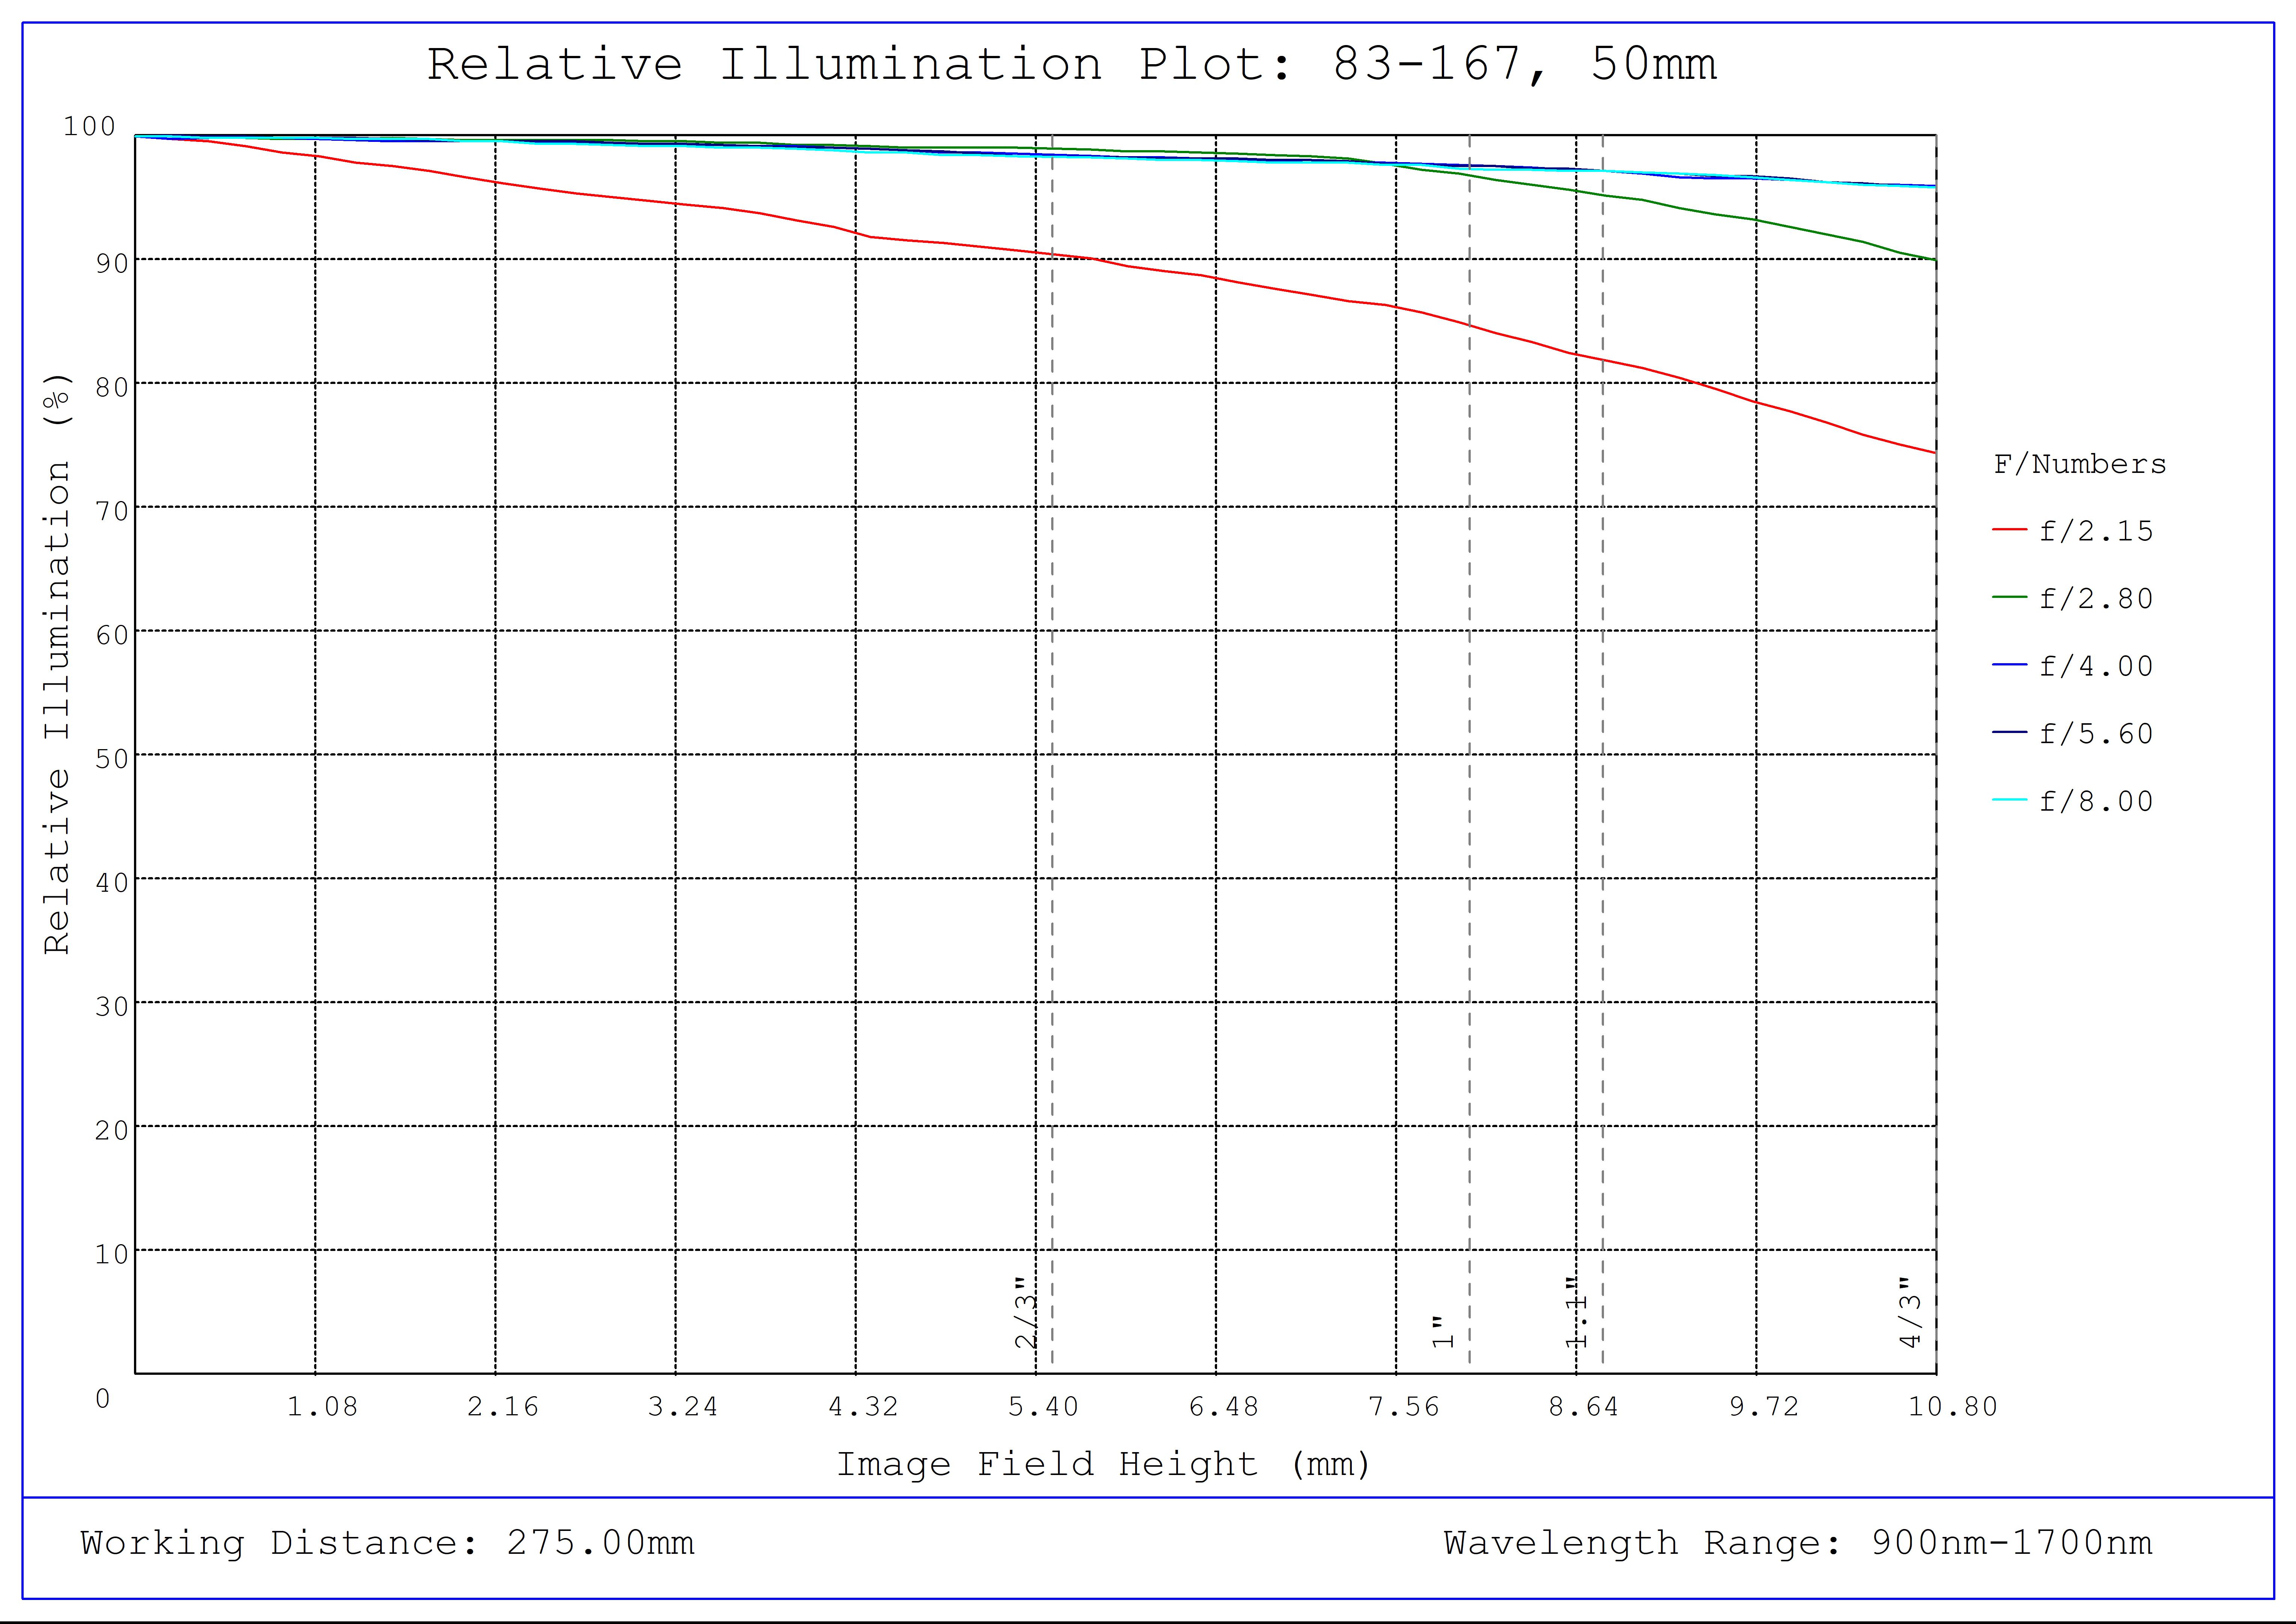 #83-167, 50mm SWIR Series Fixed Focal Length Lens, M42 x 1.0, Relative Illumination Plot